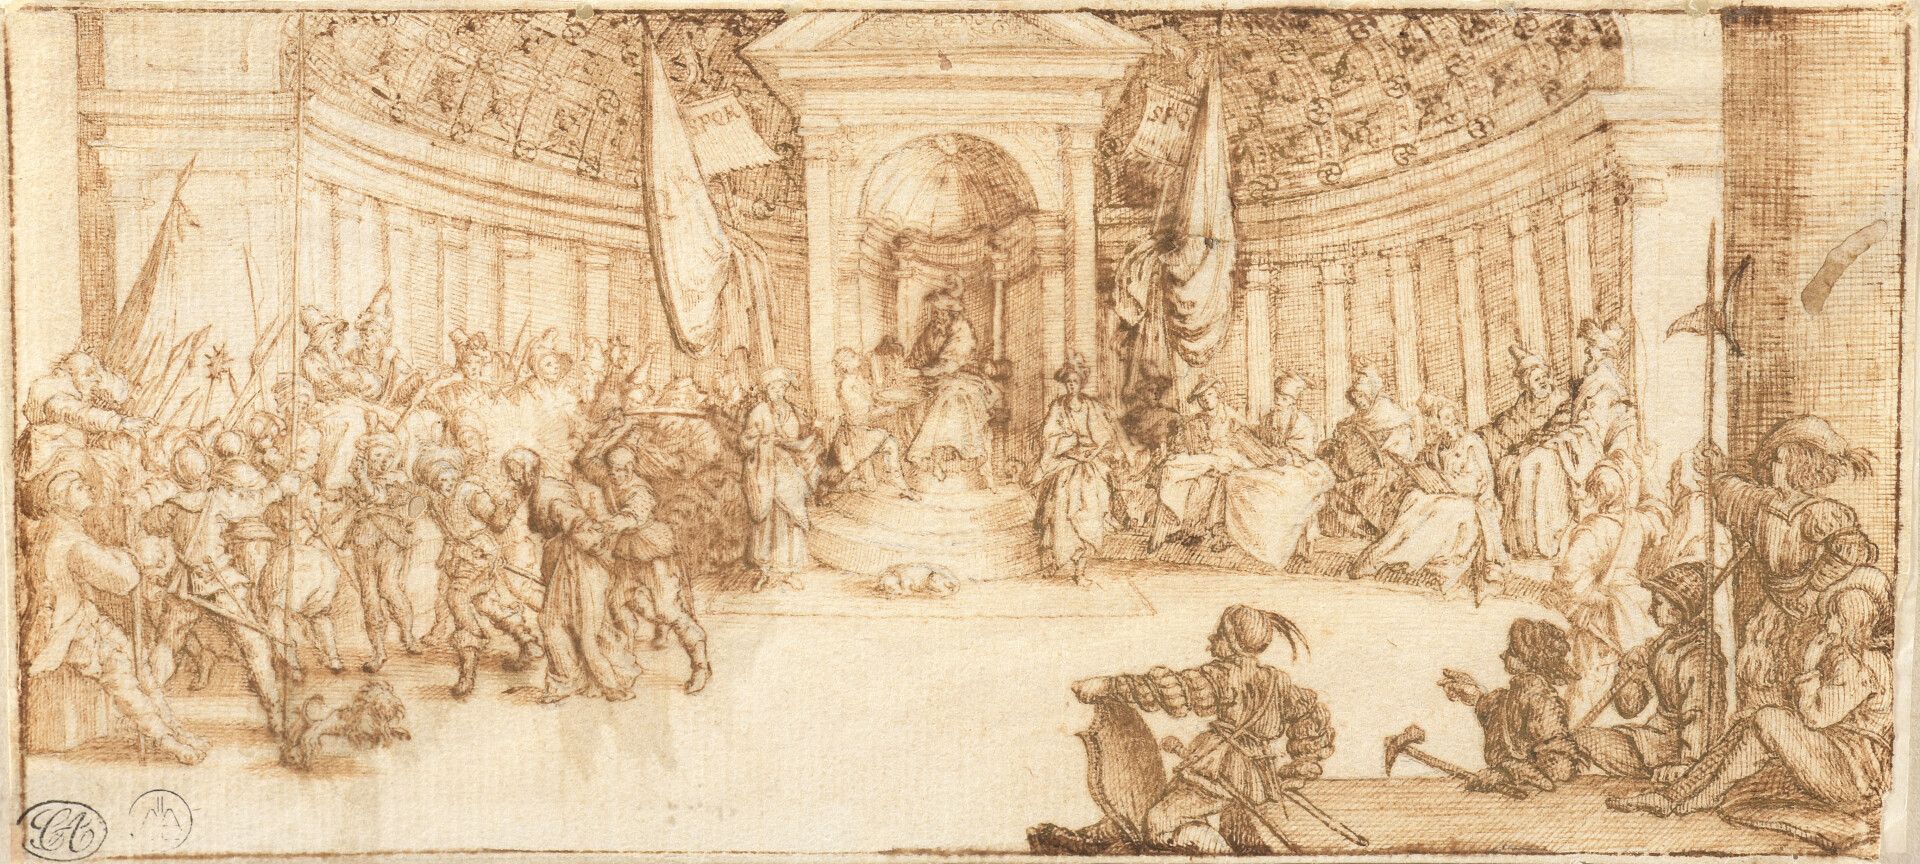 Null 17世纪佛罗伦萨学校

基督在彼拉多面前

钢笔和棕色墨水。

9,5 x 21 cm

左下角有两个收藏邮票